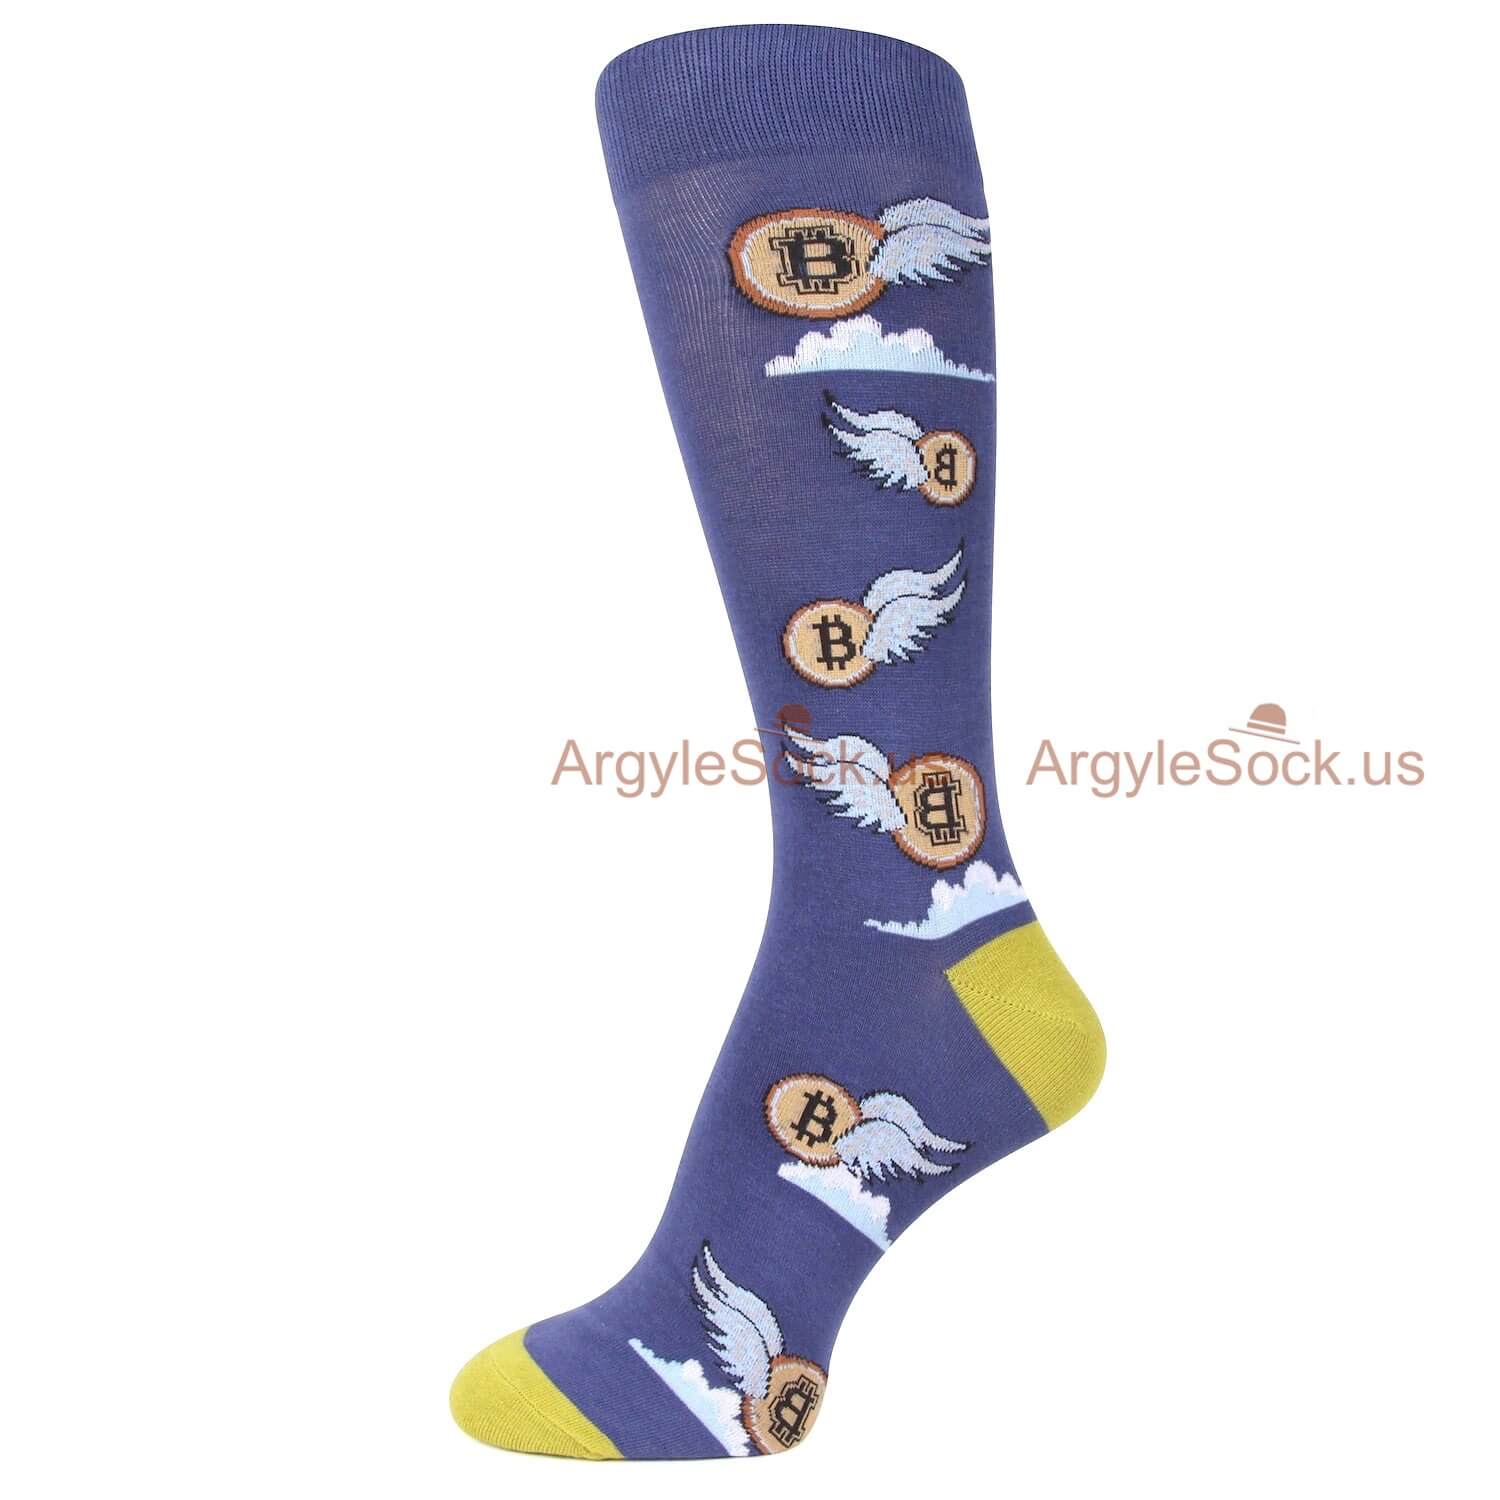 Billionaire Emblem With Wings Themed Socks For Men